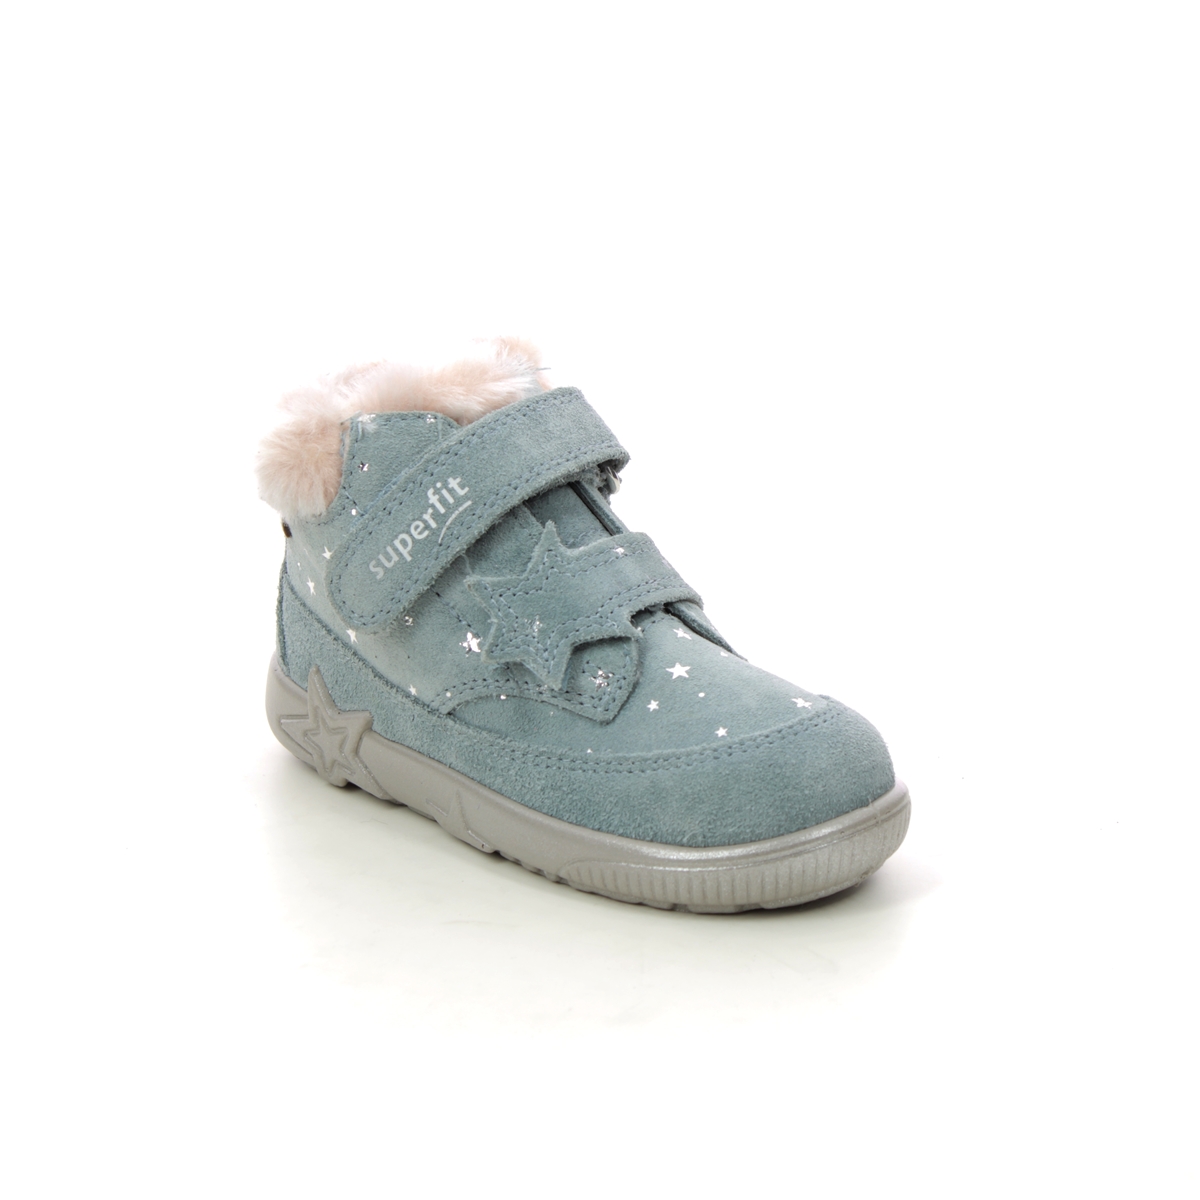 Superfit Starlight Gtx Light Blue Kids Toddler Girls Boots 1006445-7500 In Size 26 In Plain Light Blue For kids